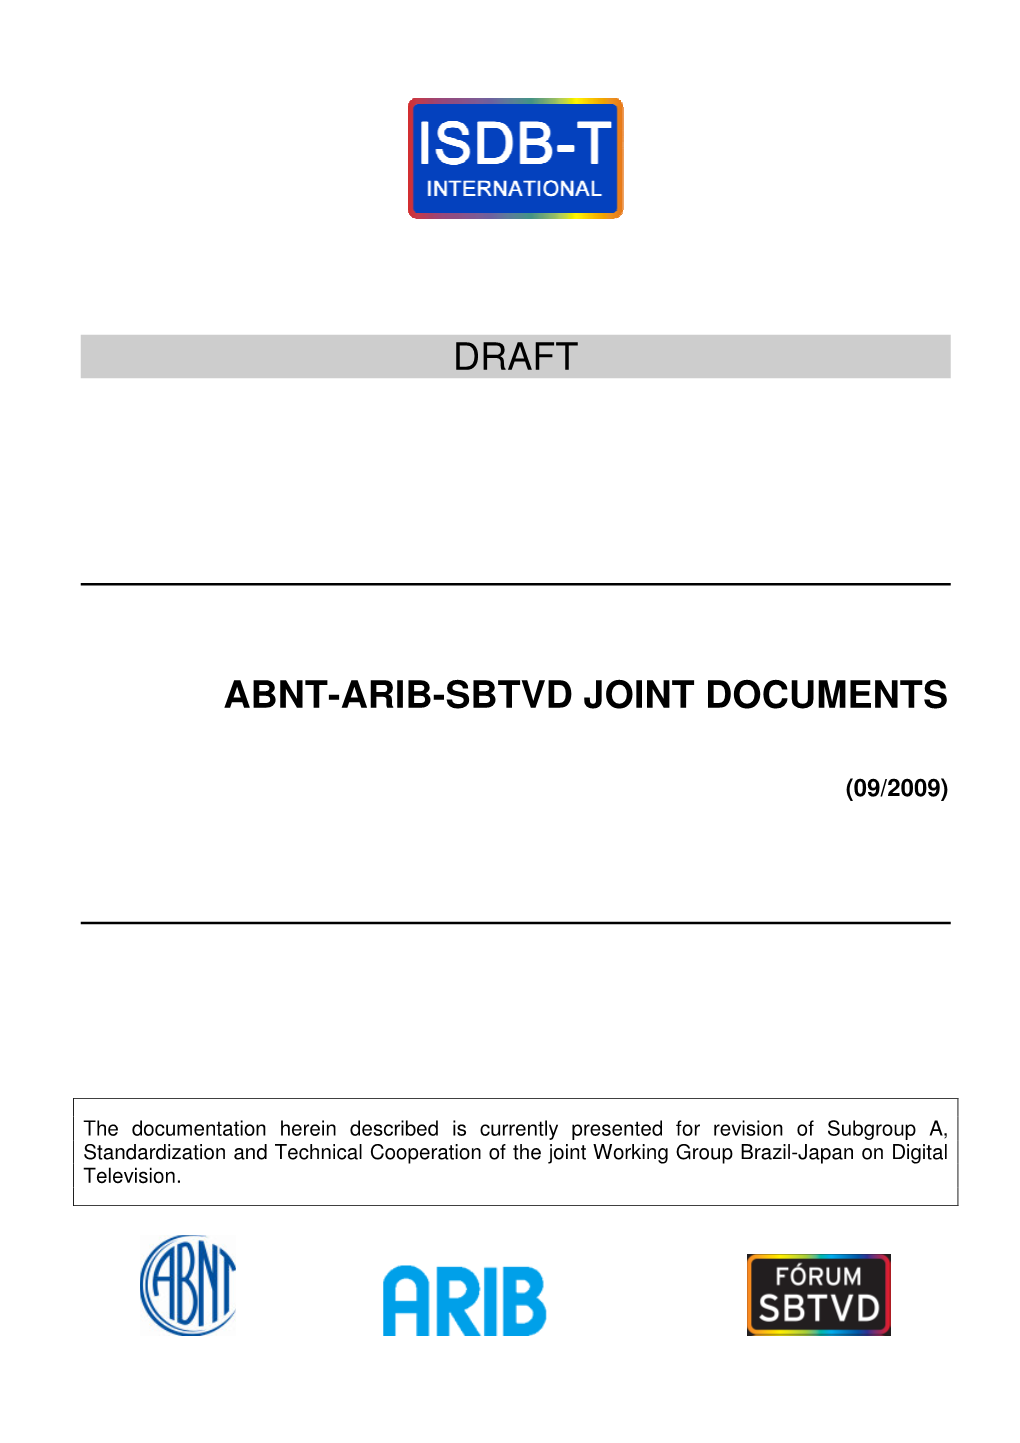 Draft Abnt-Arib-Sbtvd Joint Documents